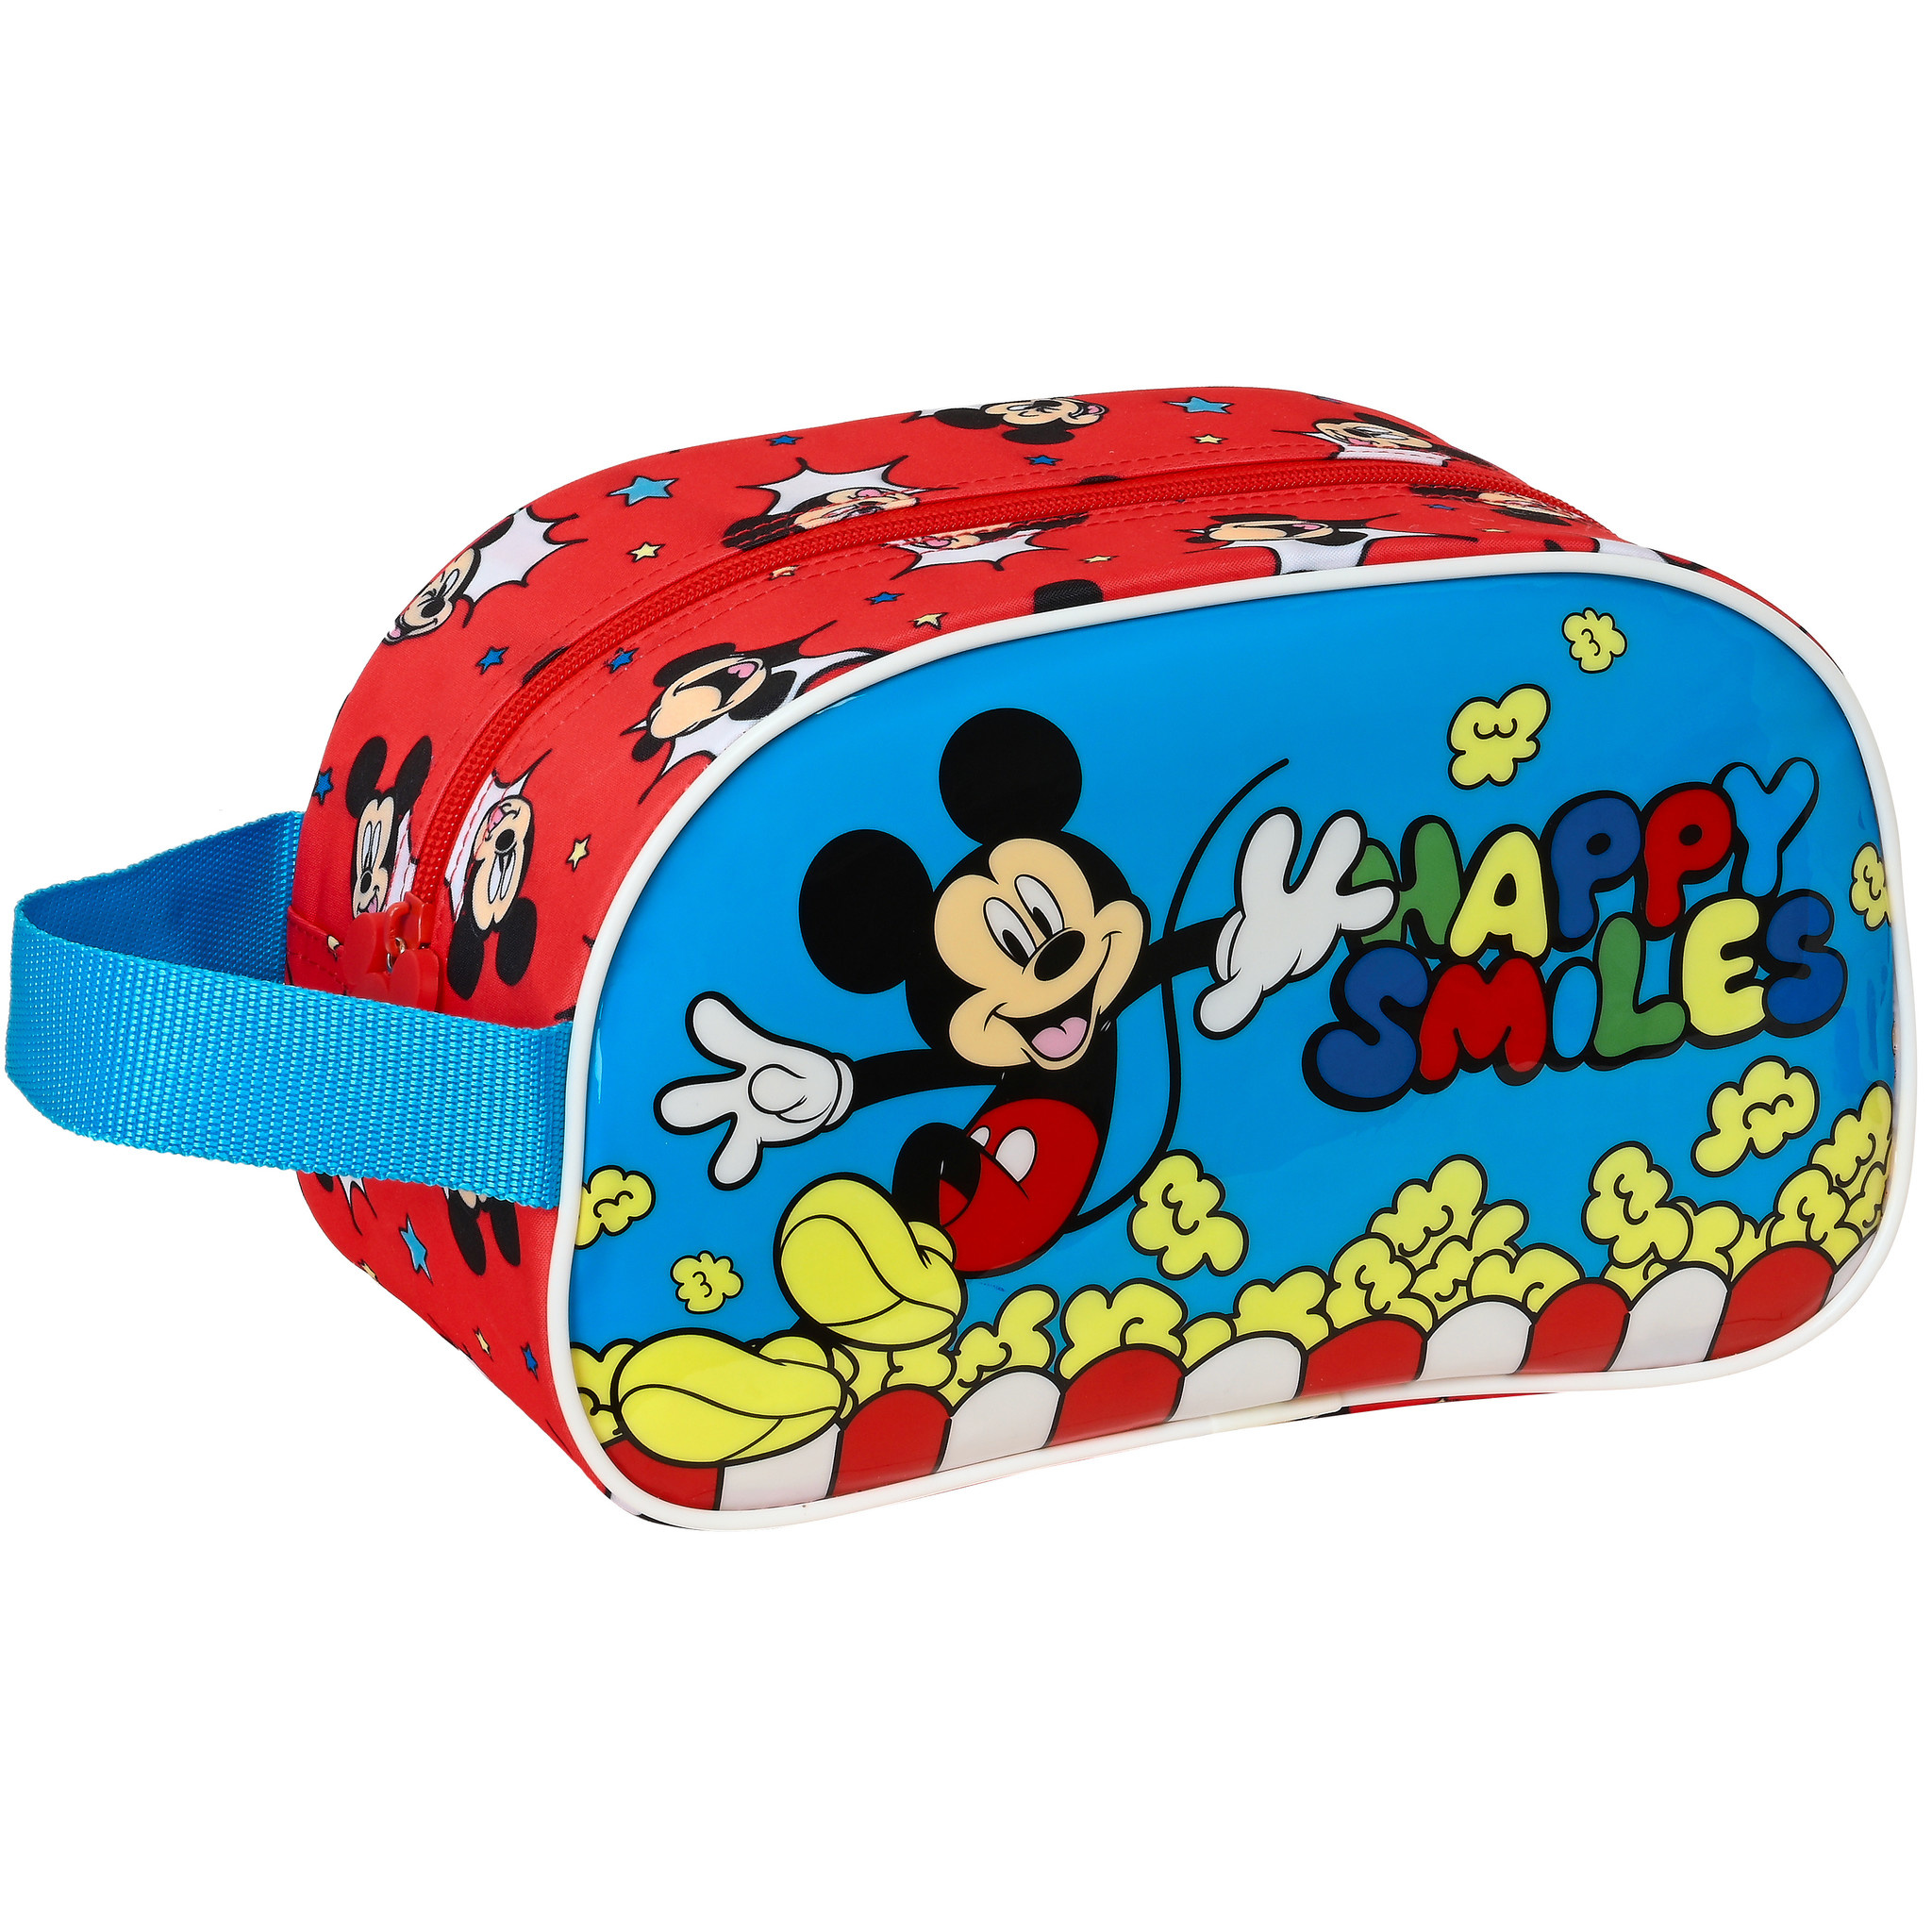 Disney Mickey Mouse Toiletry bag, Happy Smiles - 26 x 15 x 12 cm - Polyester